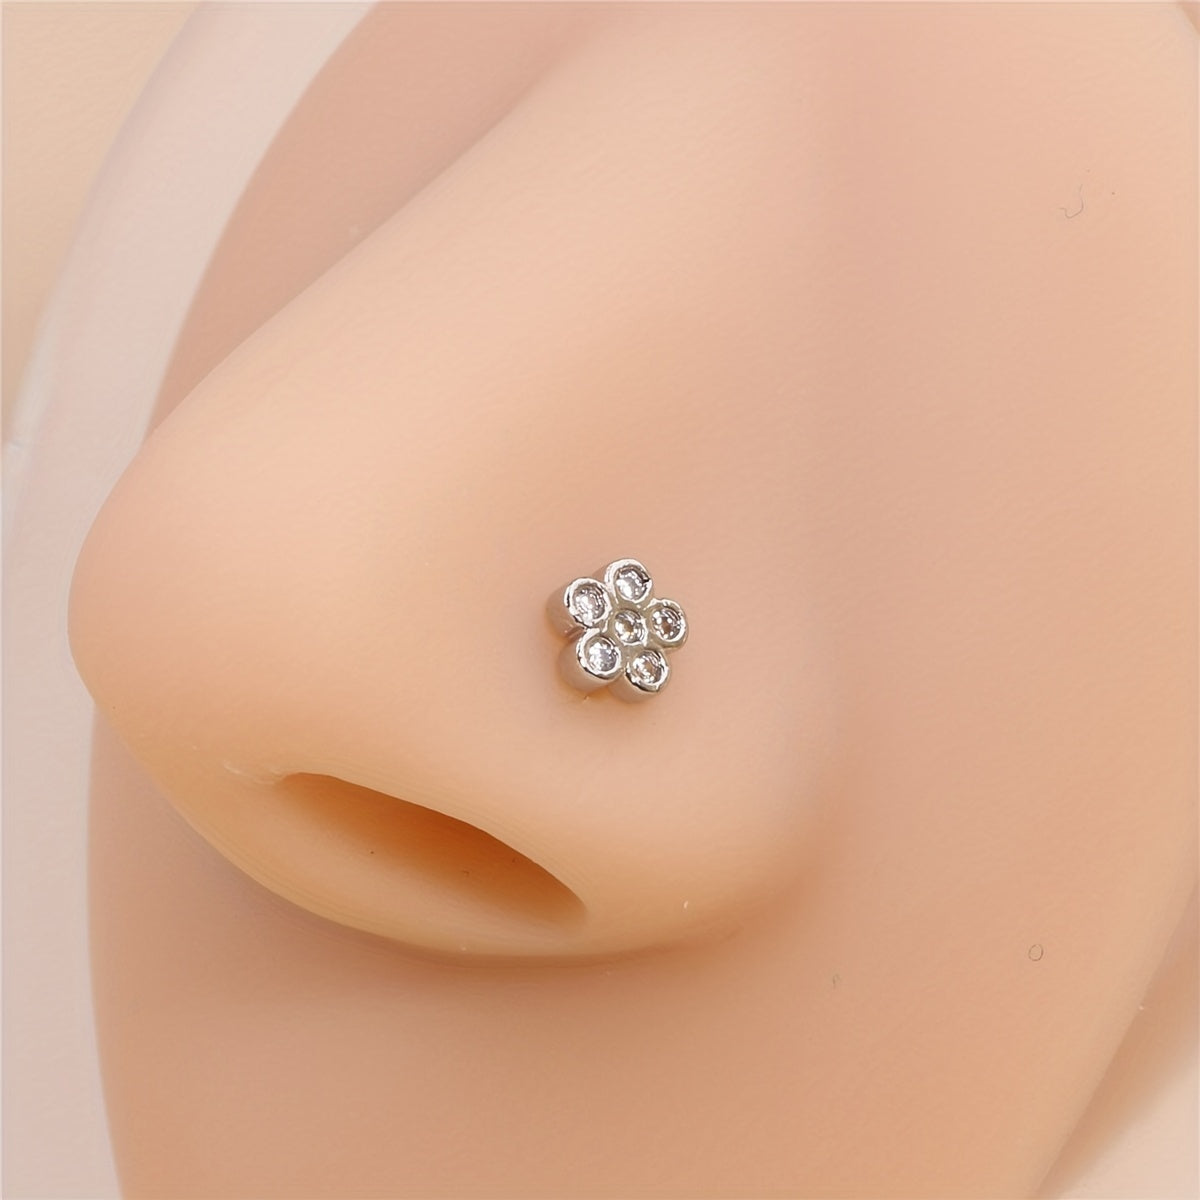 Nose Stud Rings L Shape Cubic Zirconia Flower Shape Nose Studs Piercing Jewelry For Women Men